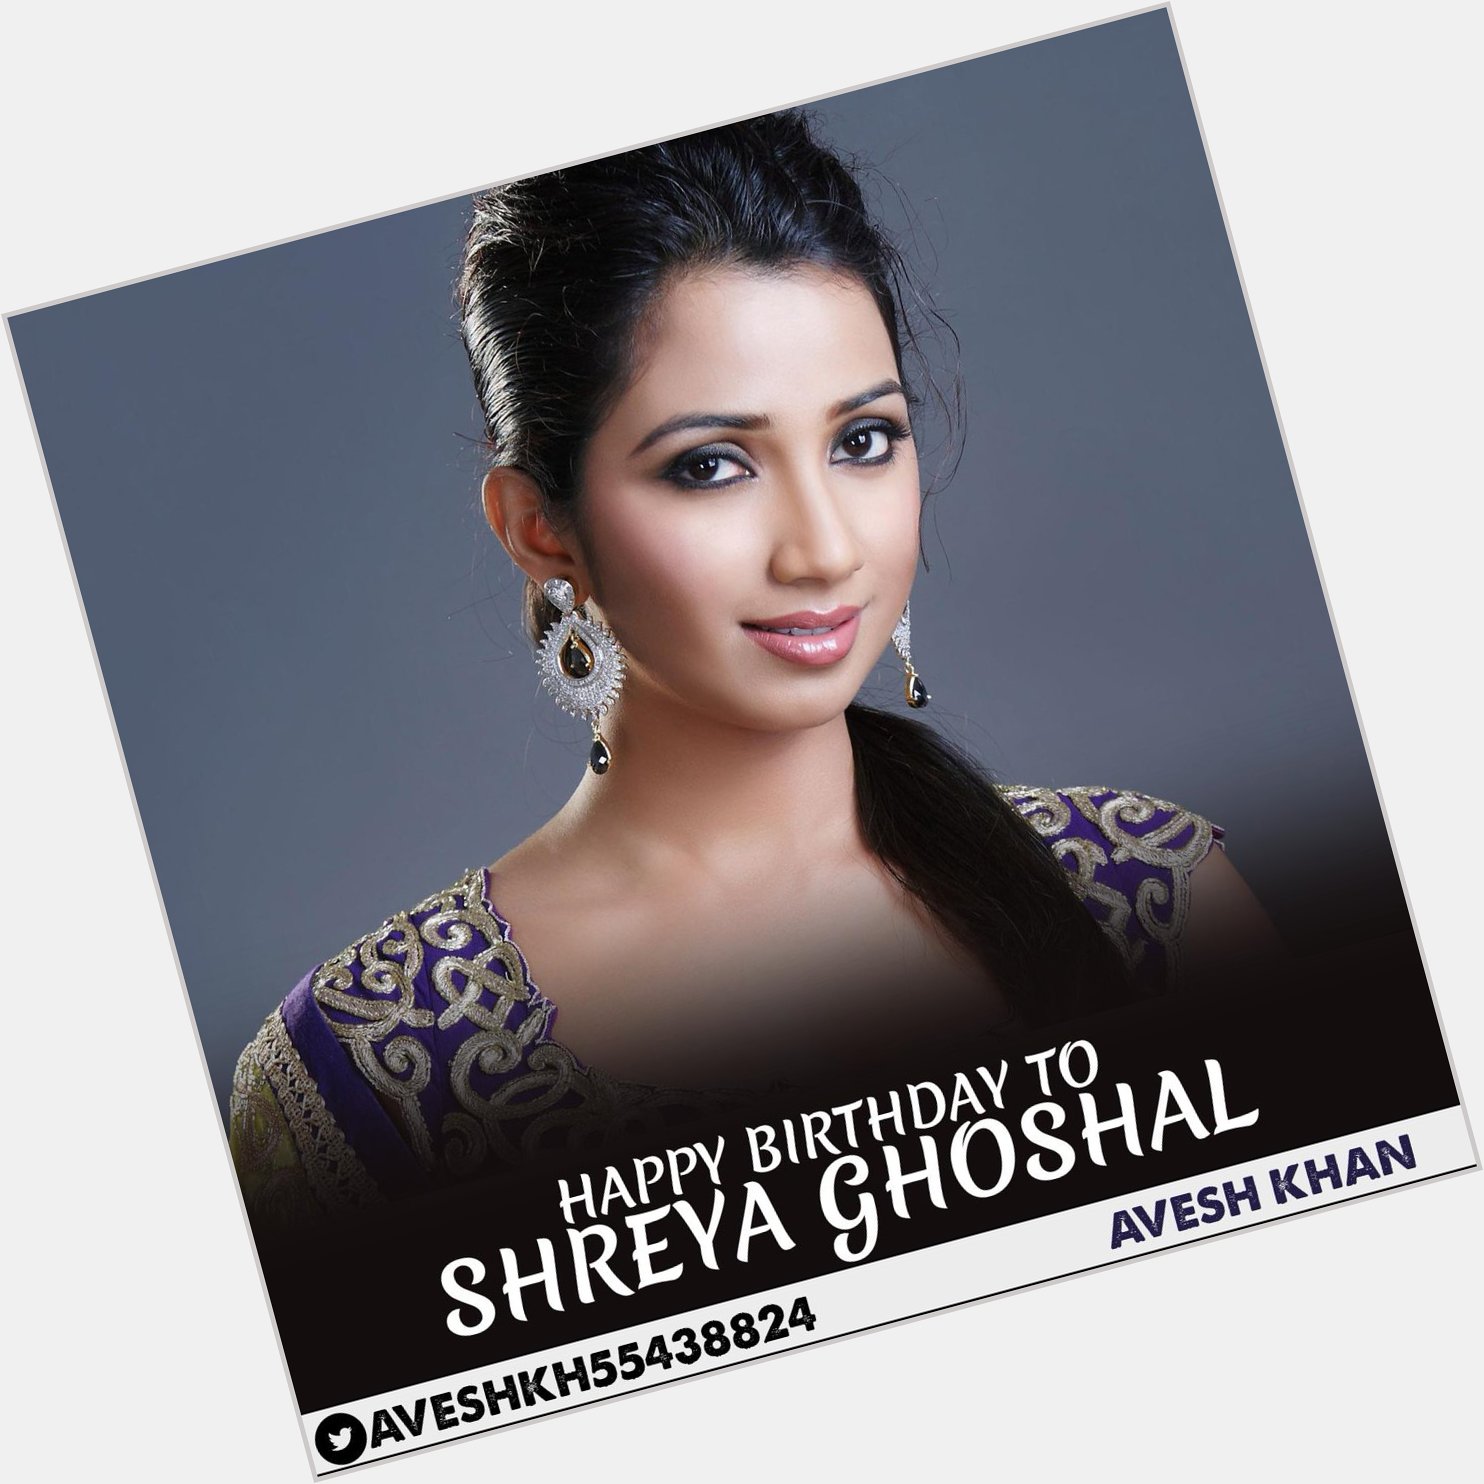 HAPPY BIRTHDAY TO Indian playback singer Shreya Ghoshal 